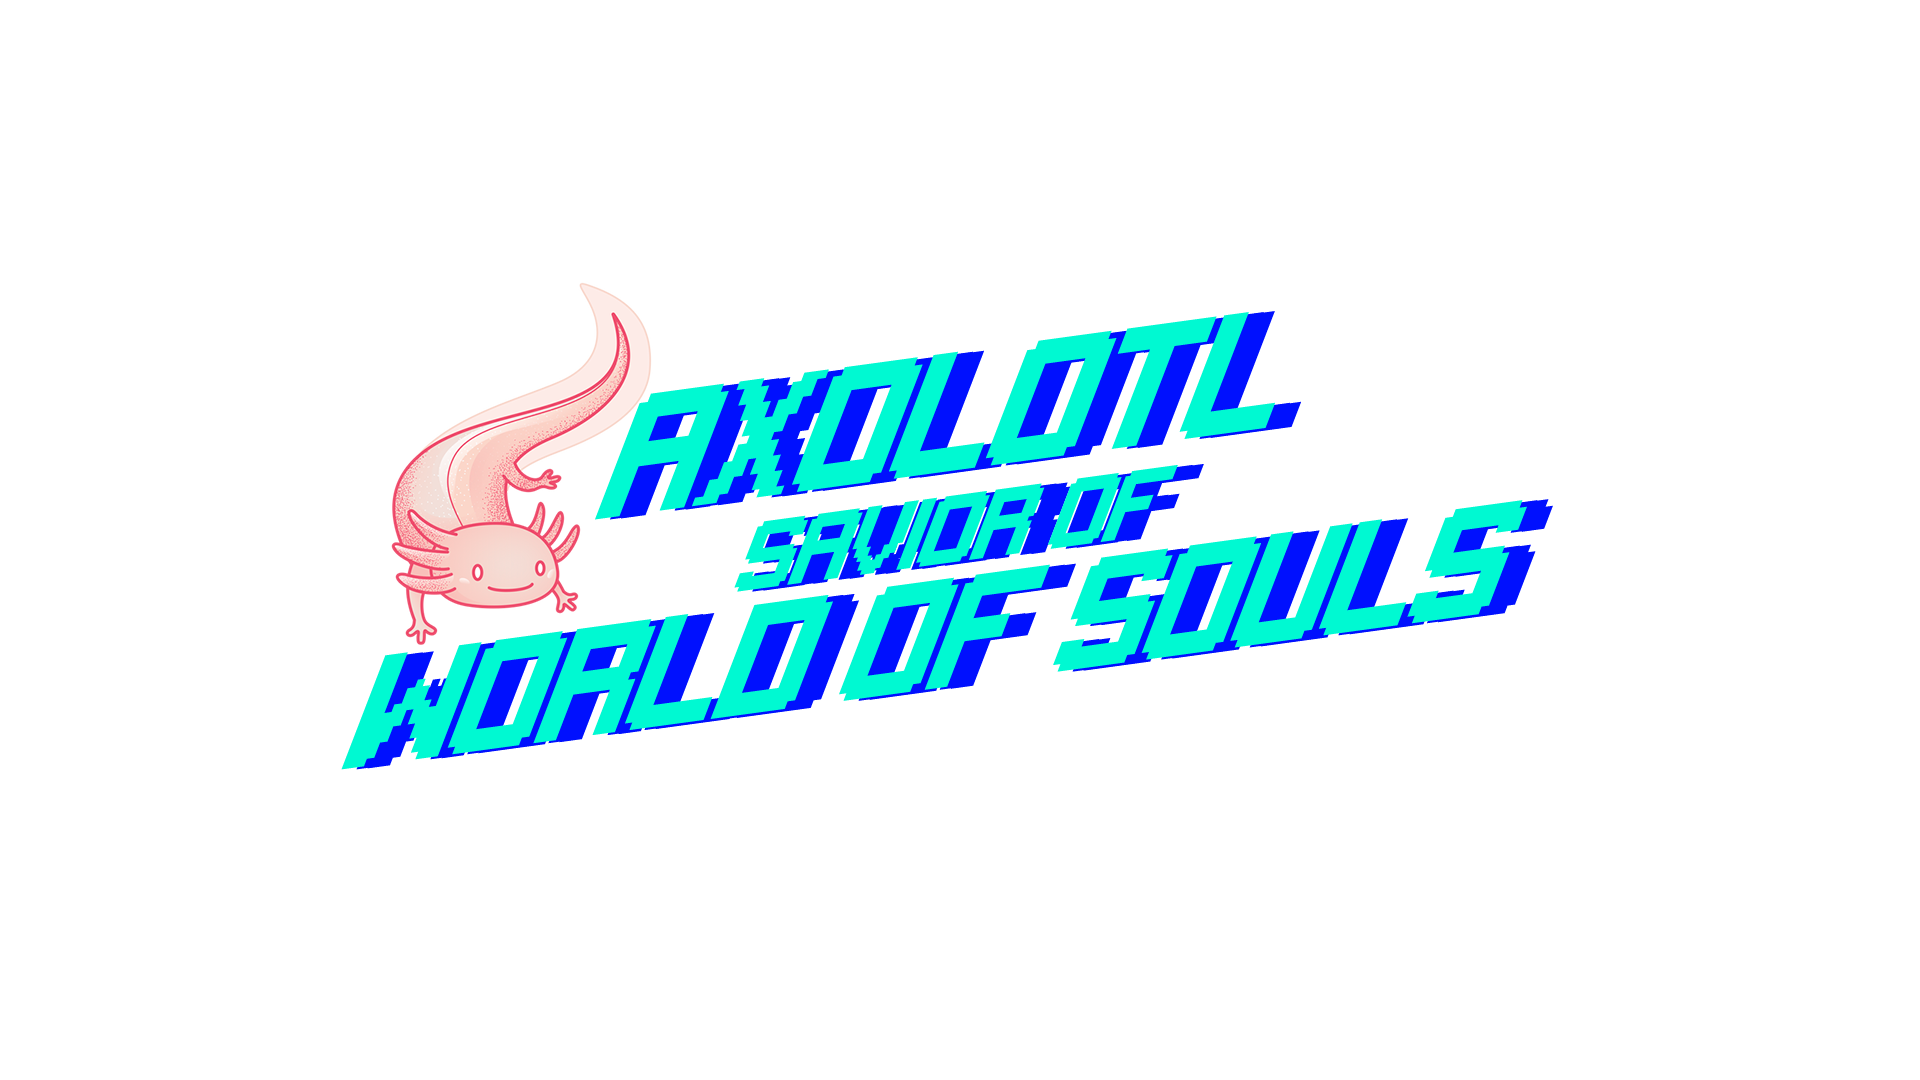 Axolotl savior of world of souls